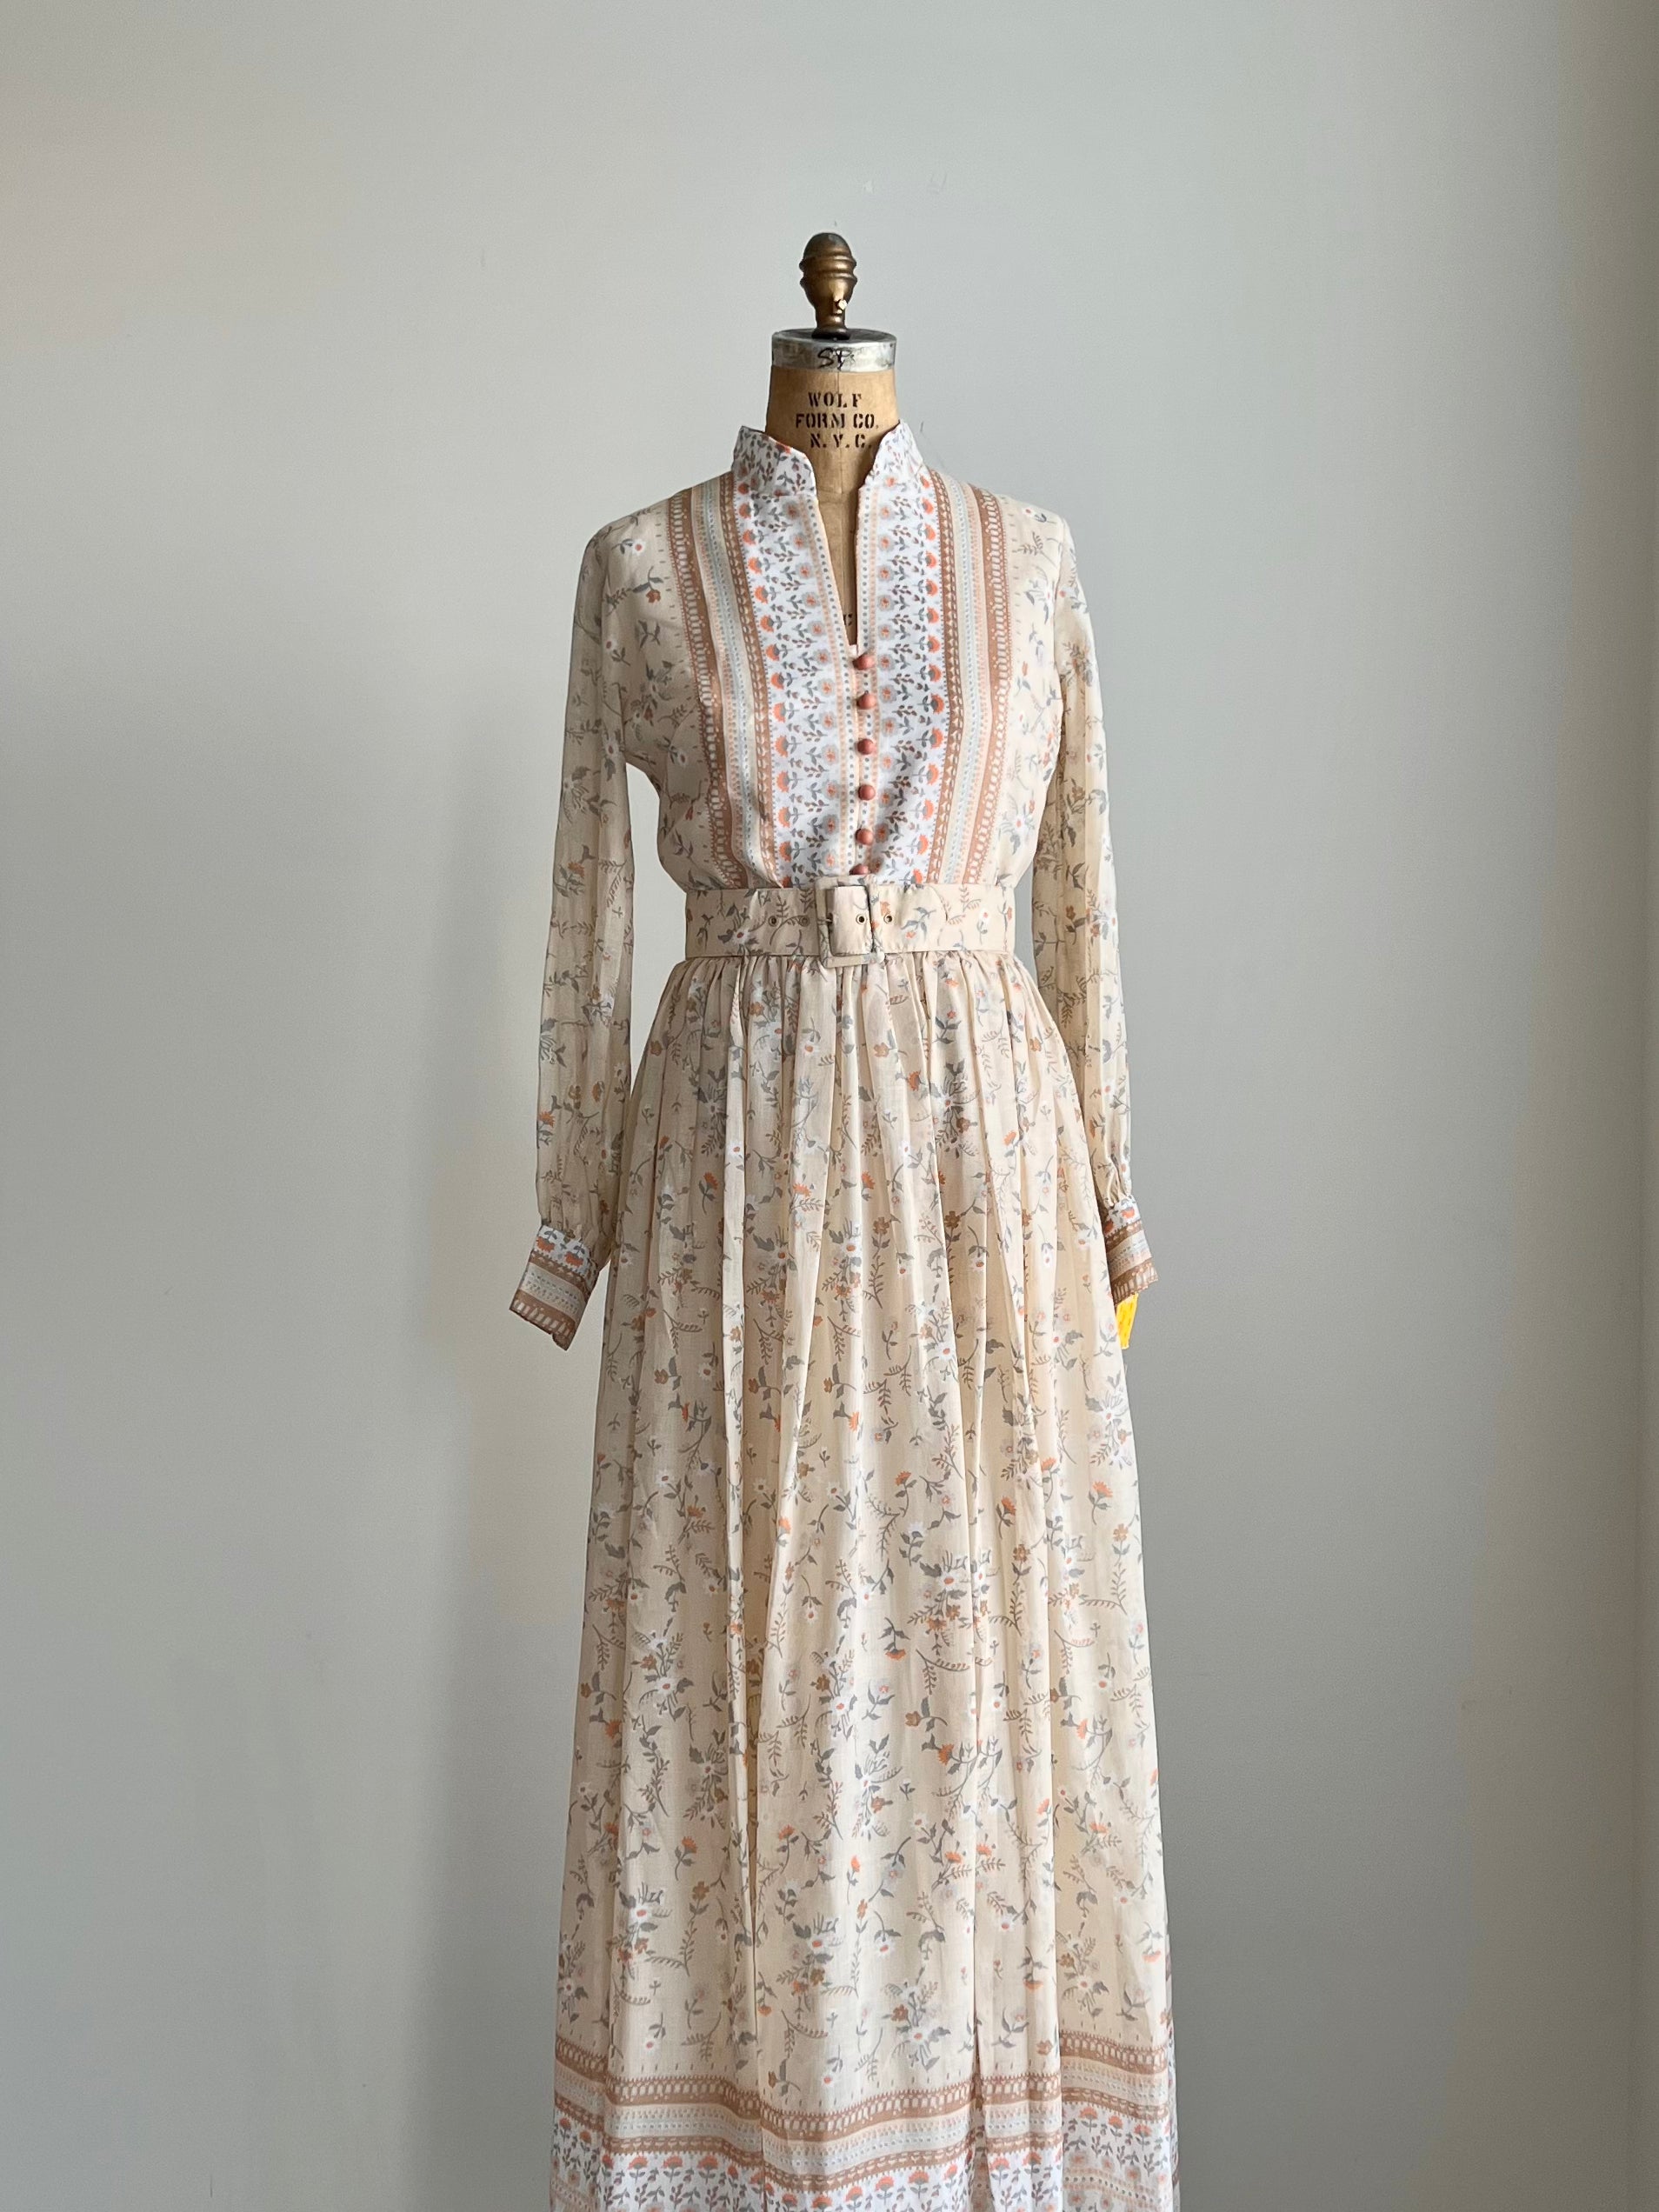 1970s Deadstock Prairie Cottagecore Boho Dress / MEDIUM